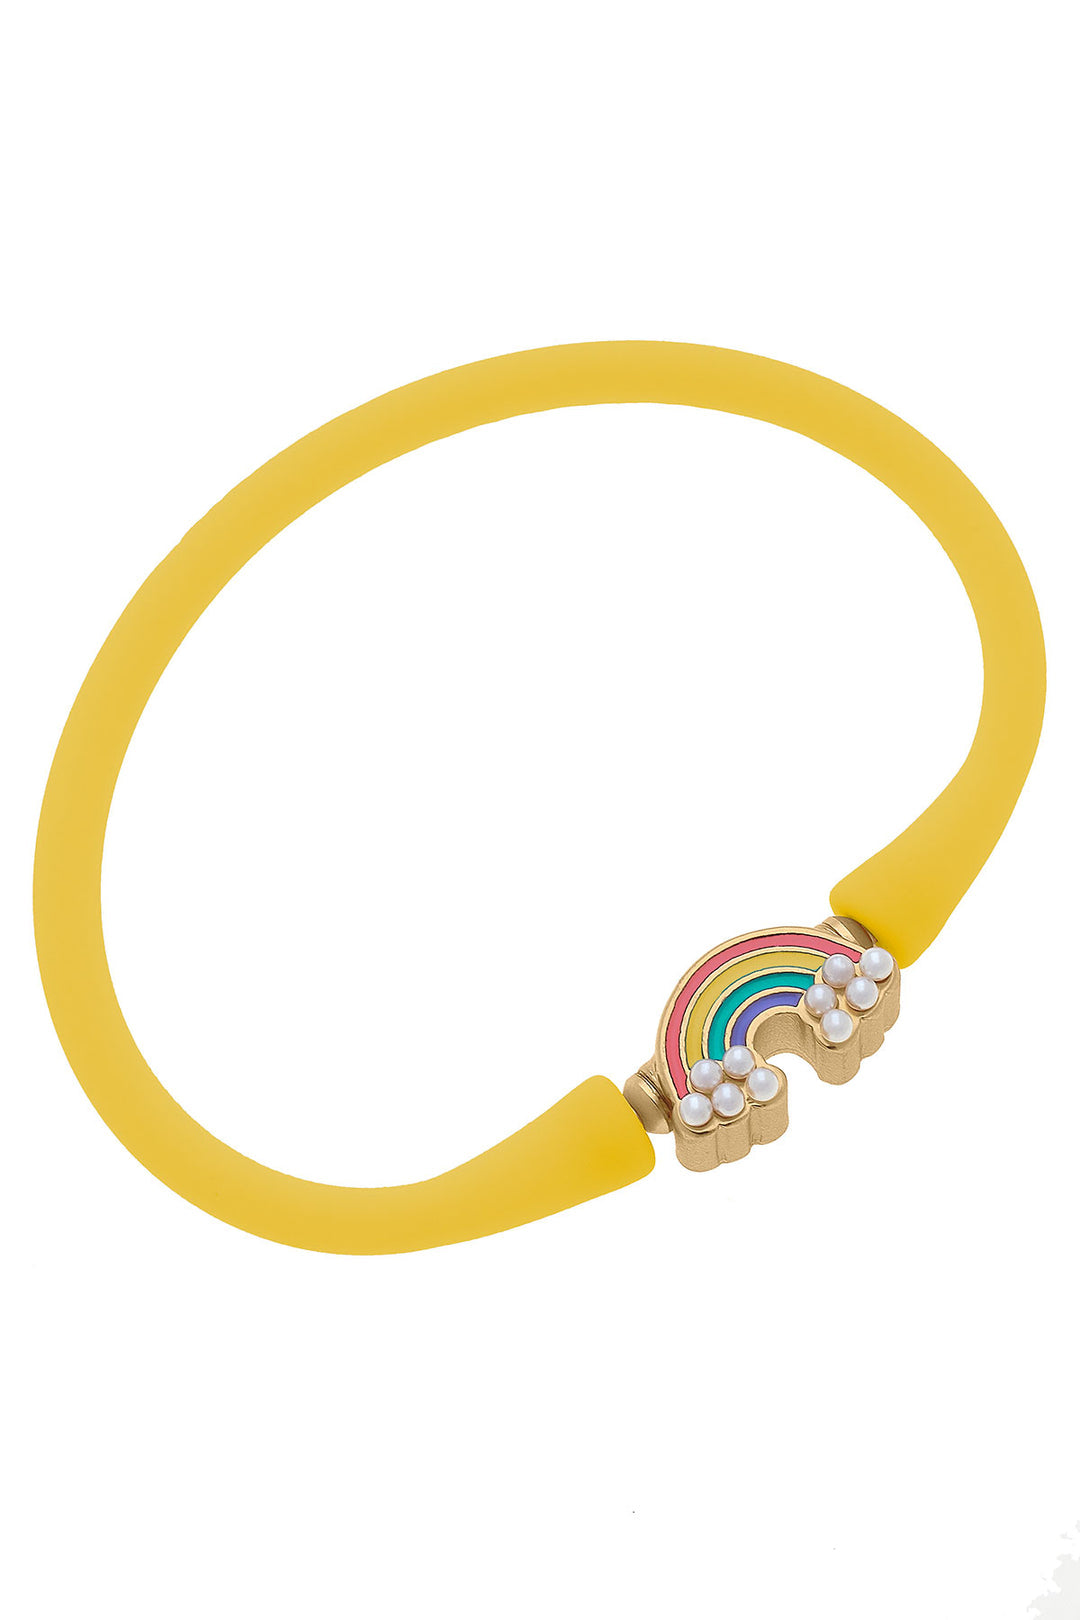 Bali Children's Rainbow Bracelet- Yellow